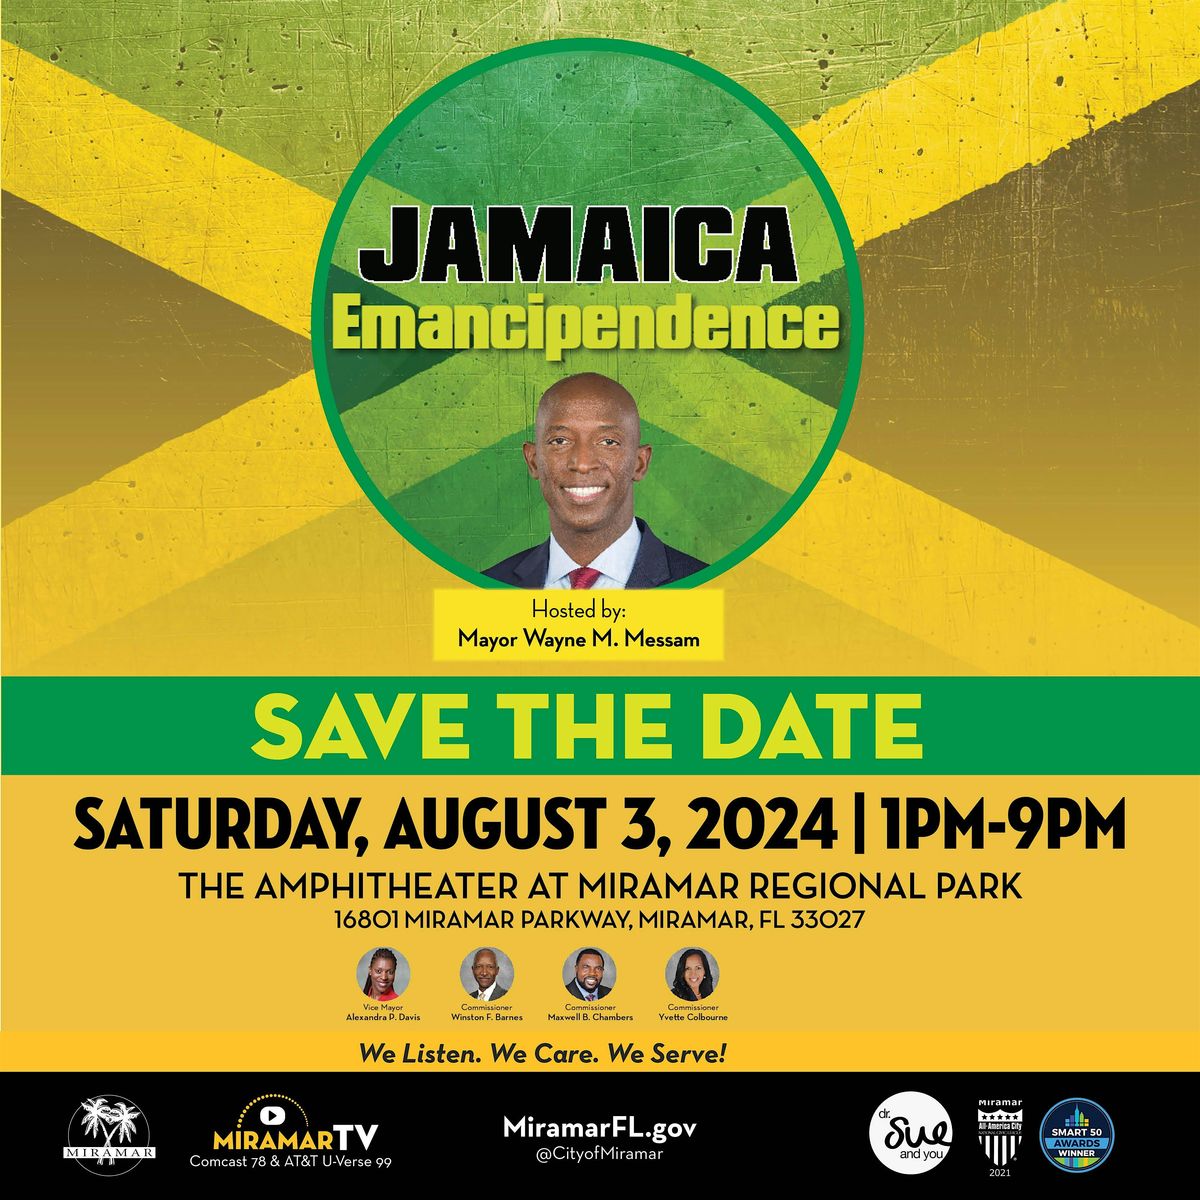 Miramar's Jamaica Emancipendence Celebration 2024